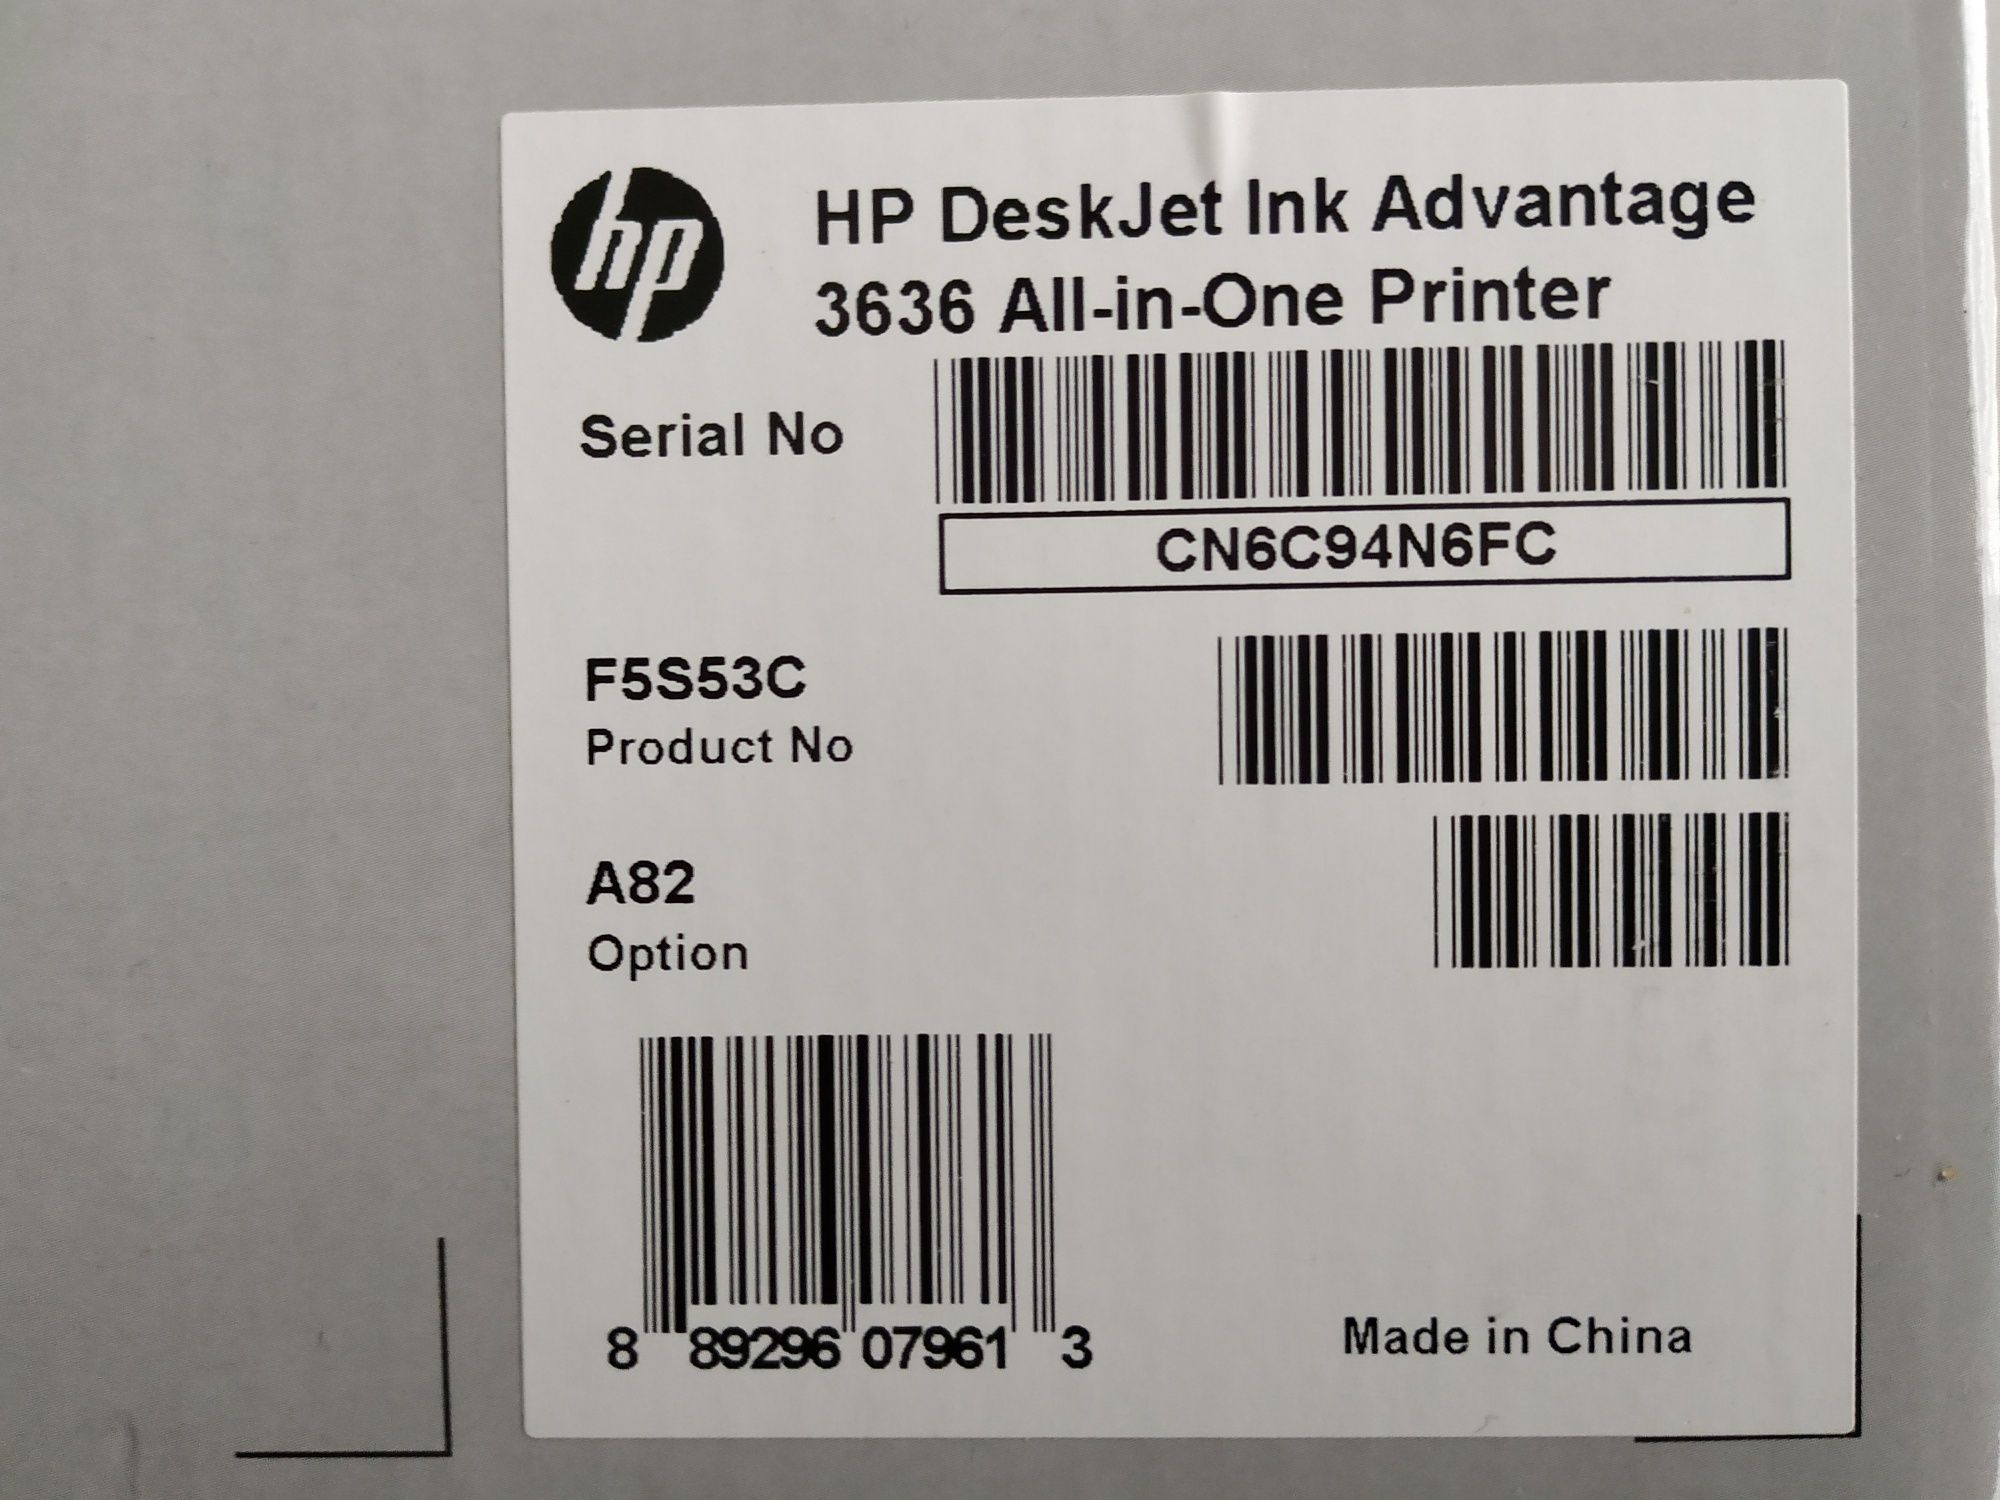 HP Desk Jet 3636